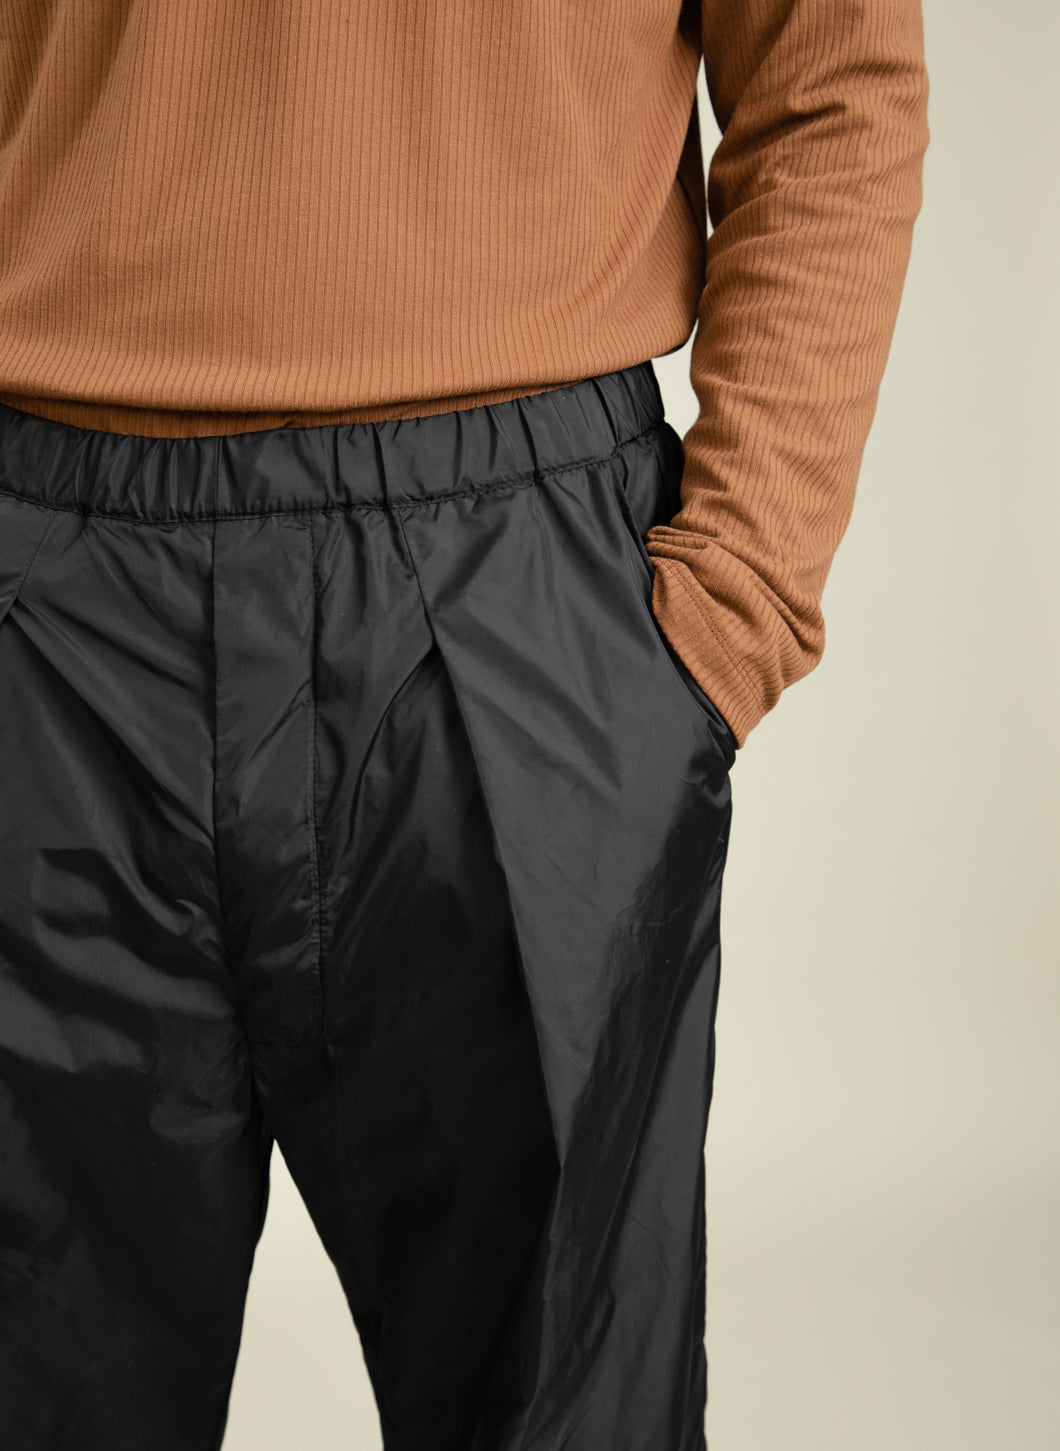 Elastic Waist Pants with Deep Pleats in Black Nylon